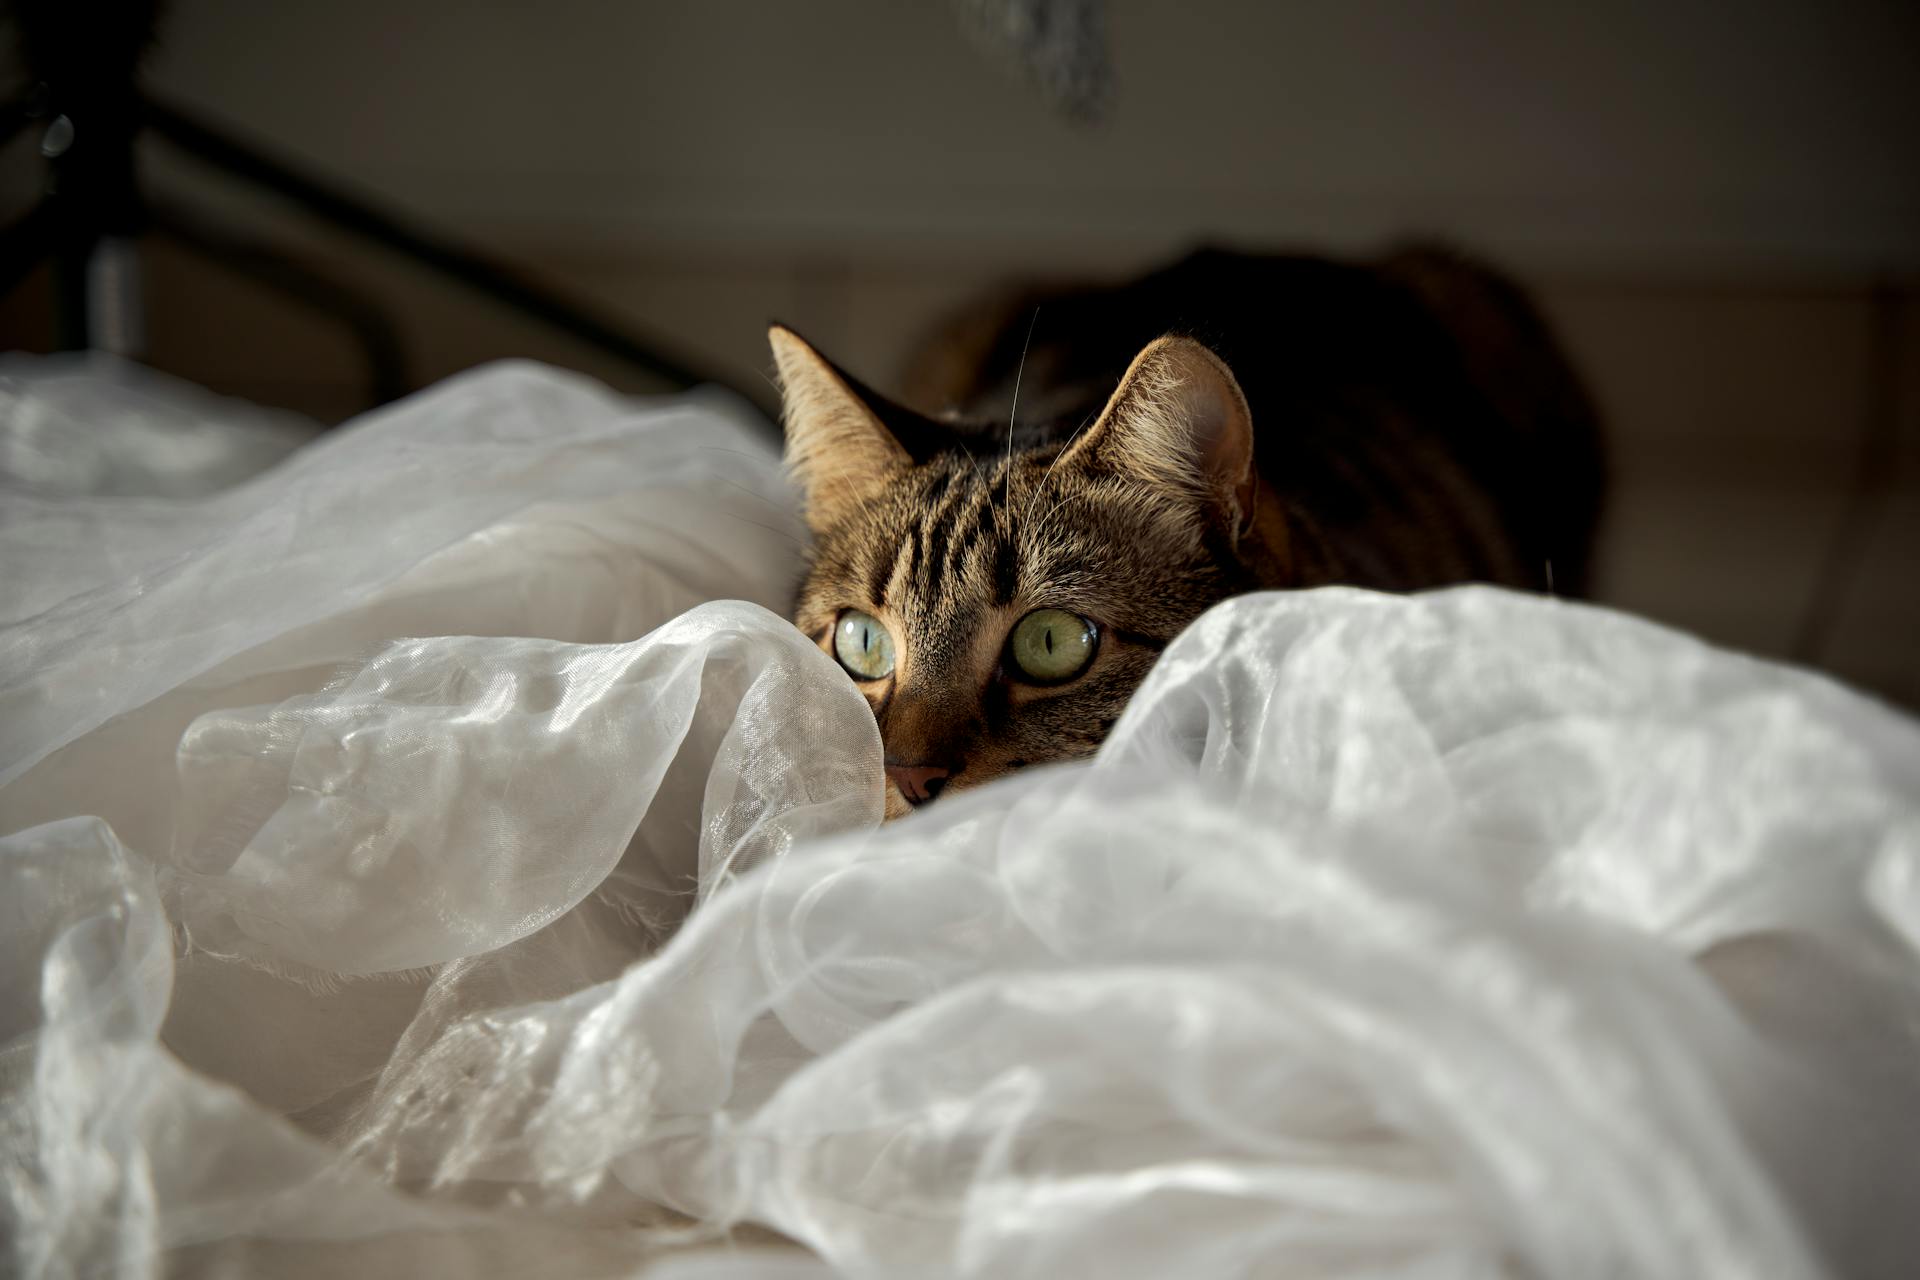 A cat hiding in blankets